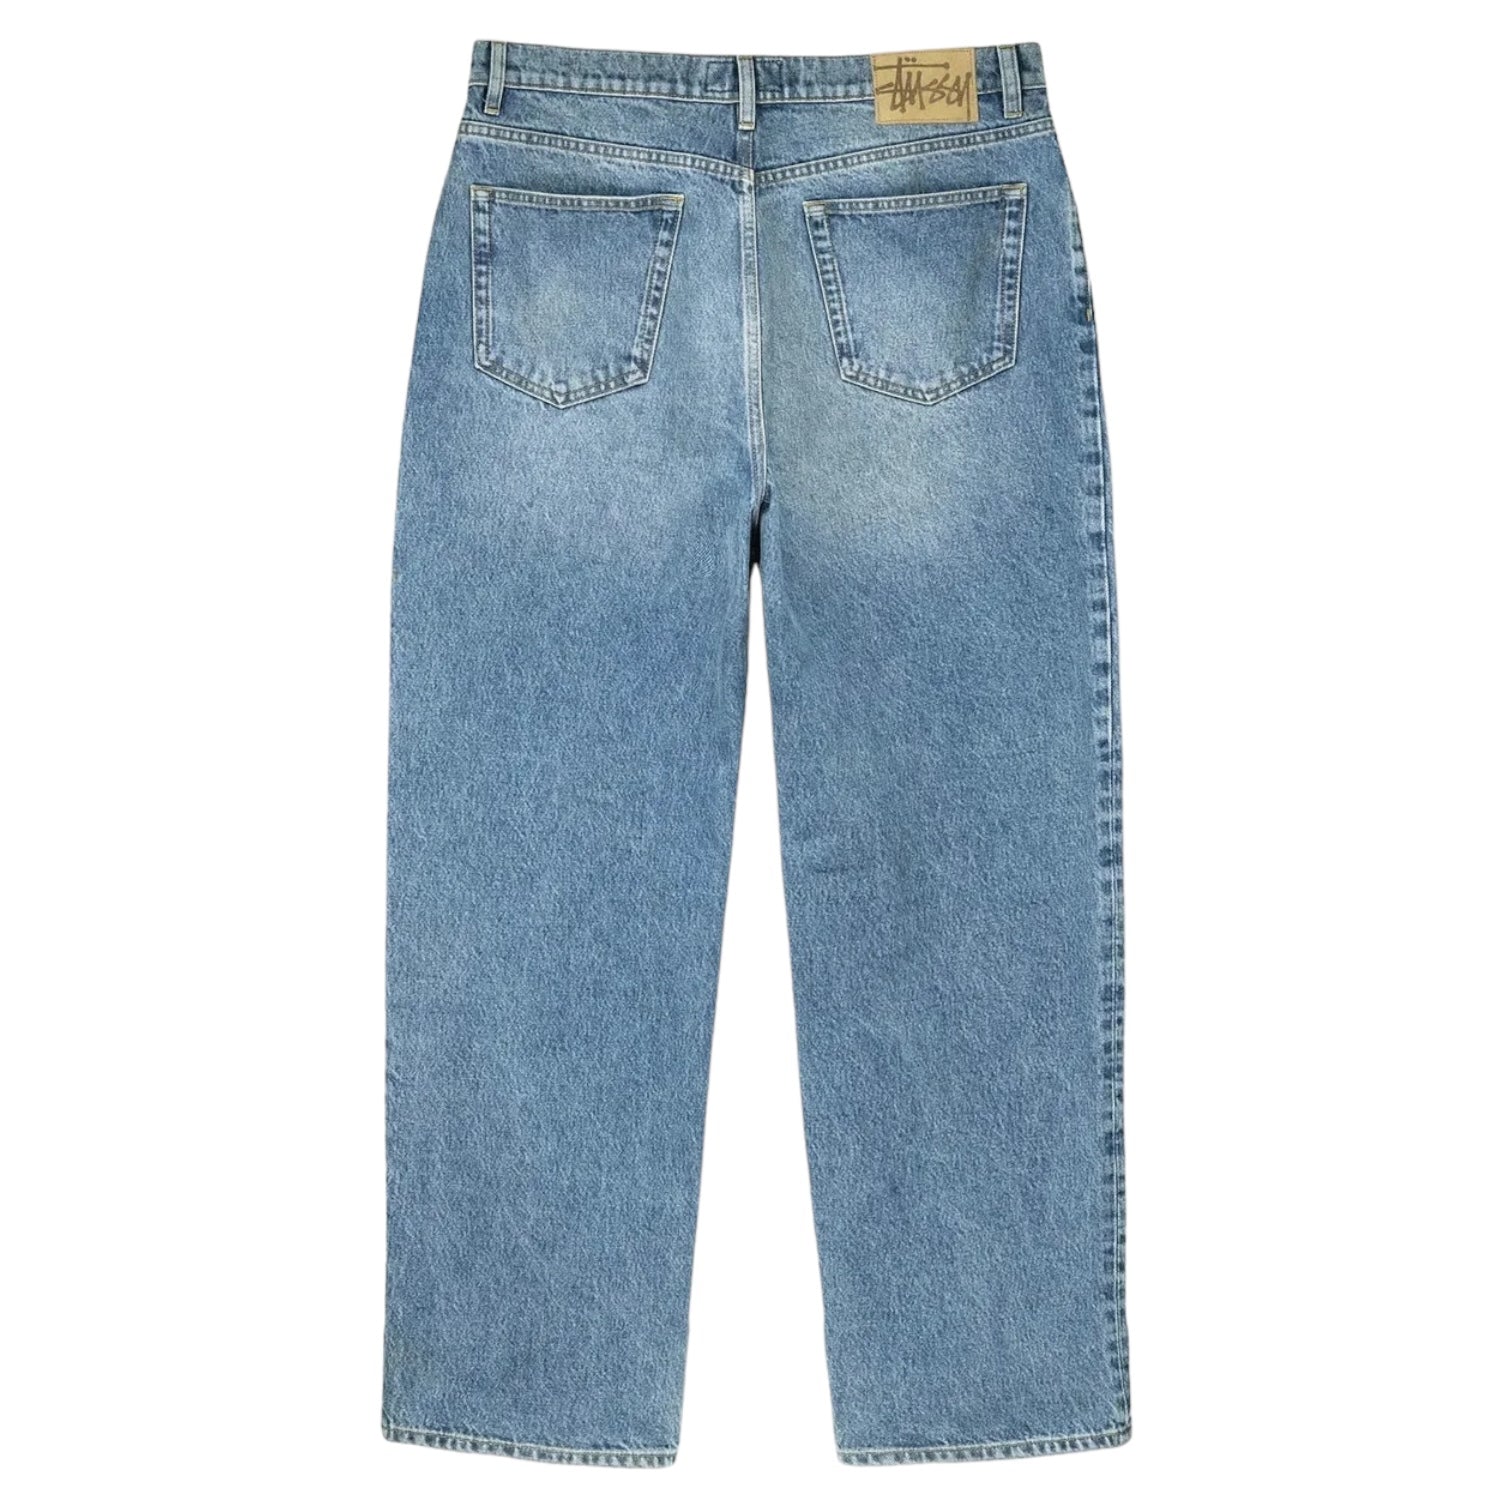 Stussy “Big Ol’ Jeans” Blue Denim Pants